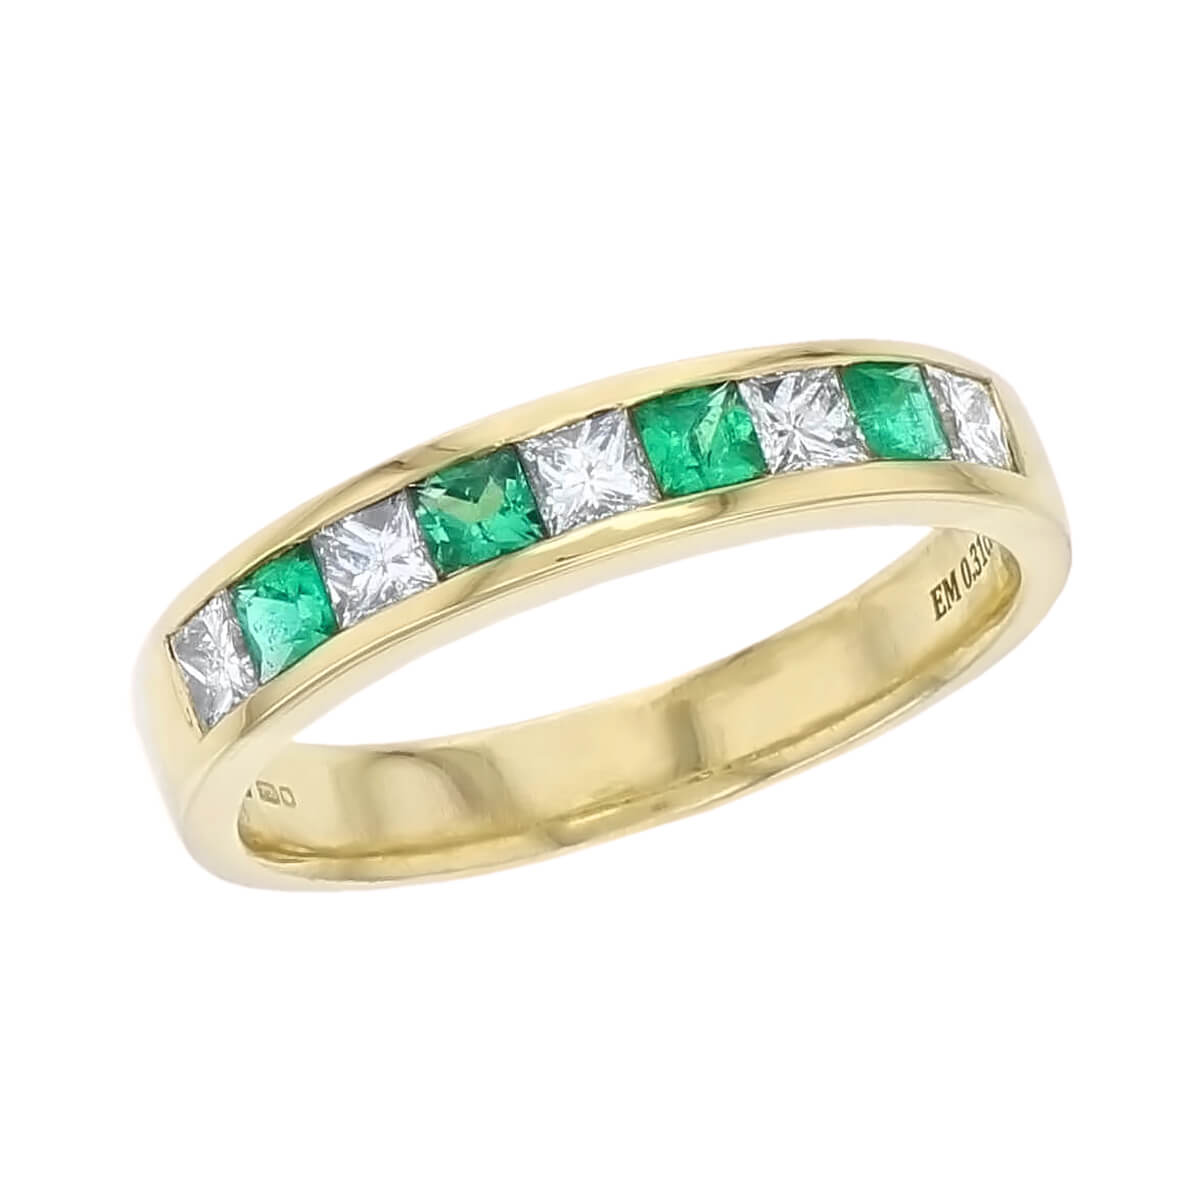 18ct yellow gold princess cut diamond & emerald eternity ring designer dress ring handmade by Faller, hand crafted, precious jewellery, jewelry, ladies, woman